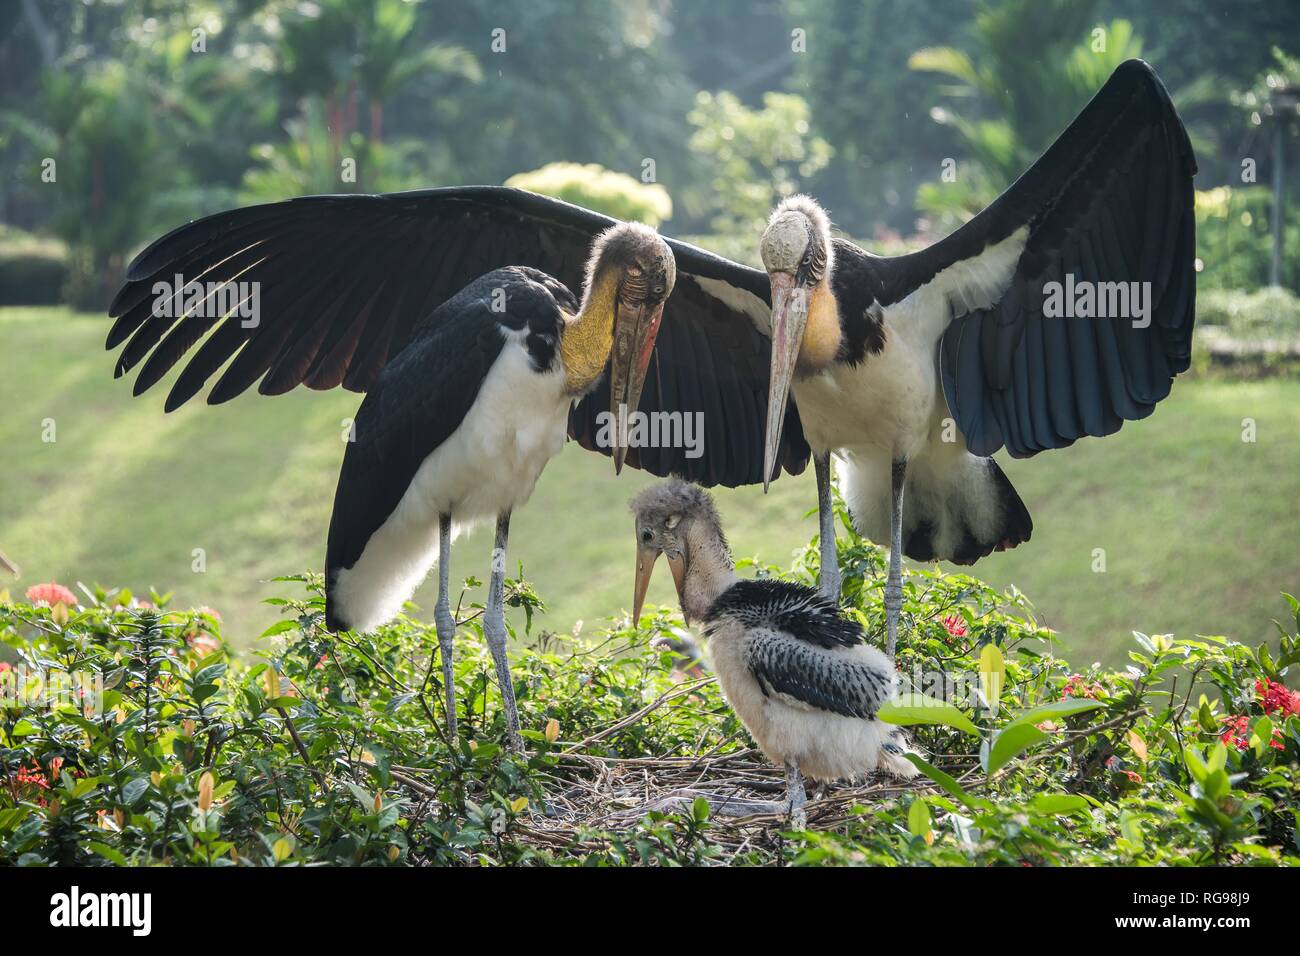 Three hornbill birds, Indonesia Stock Photo